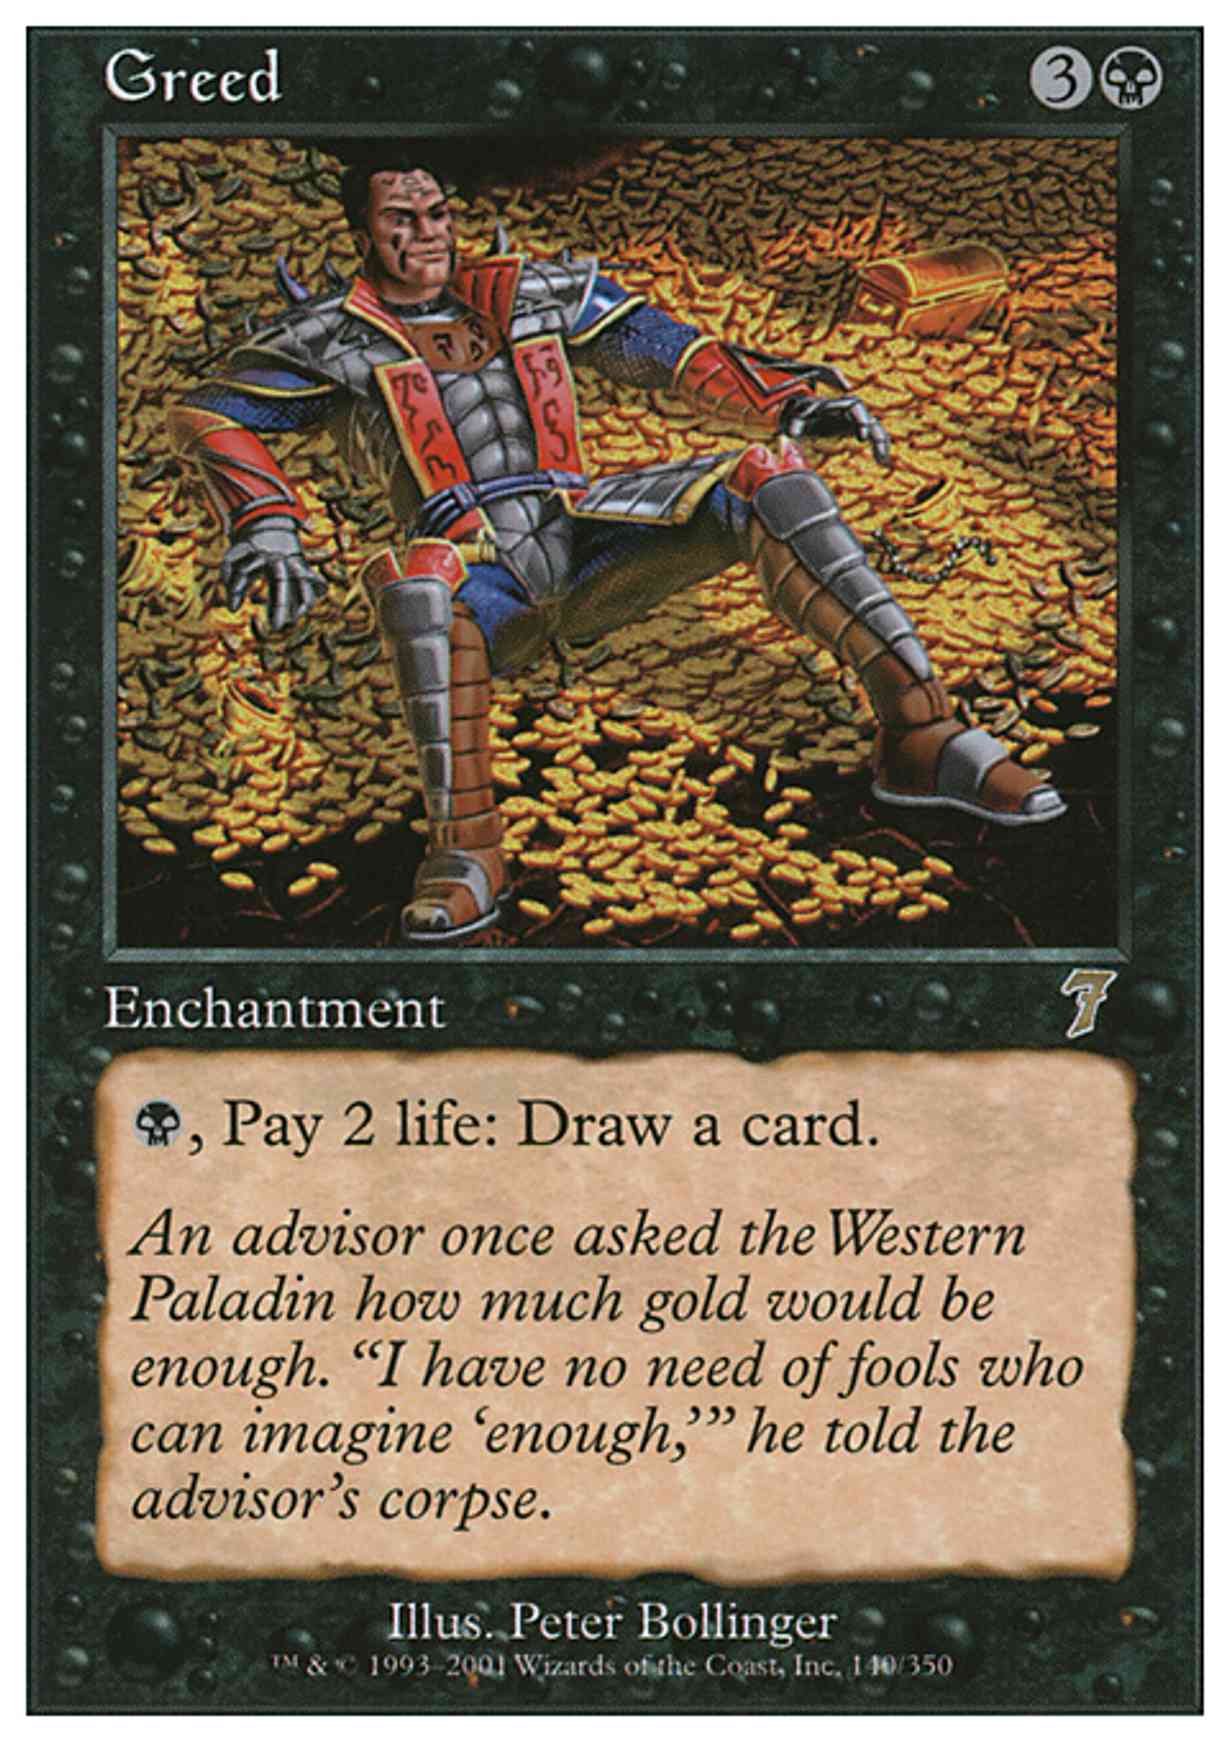 Greed magic card front